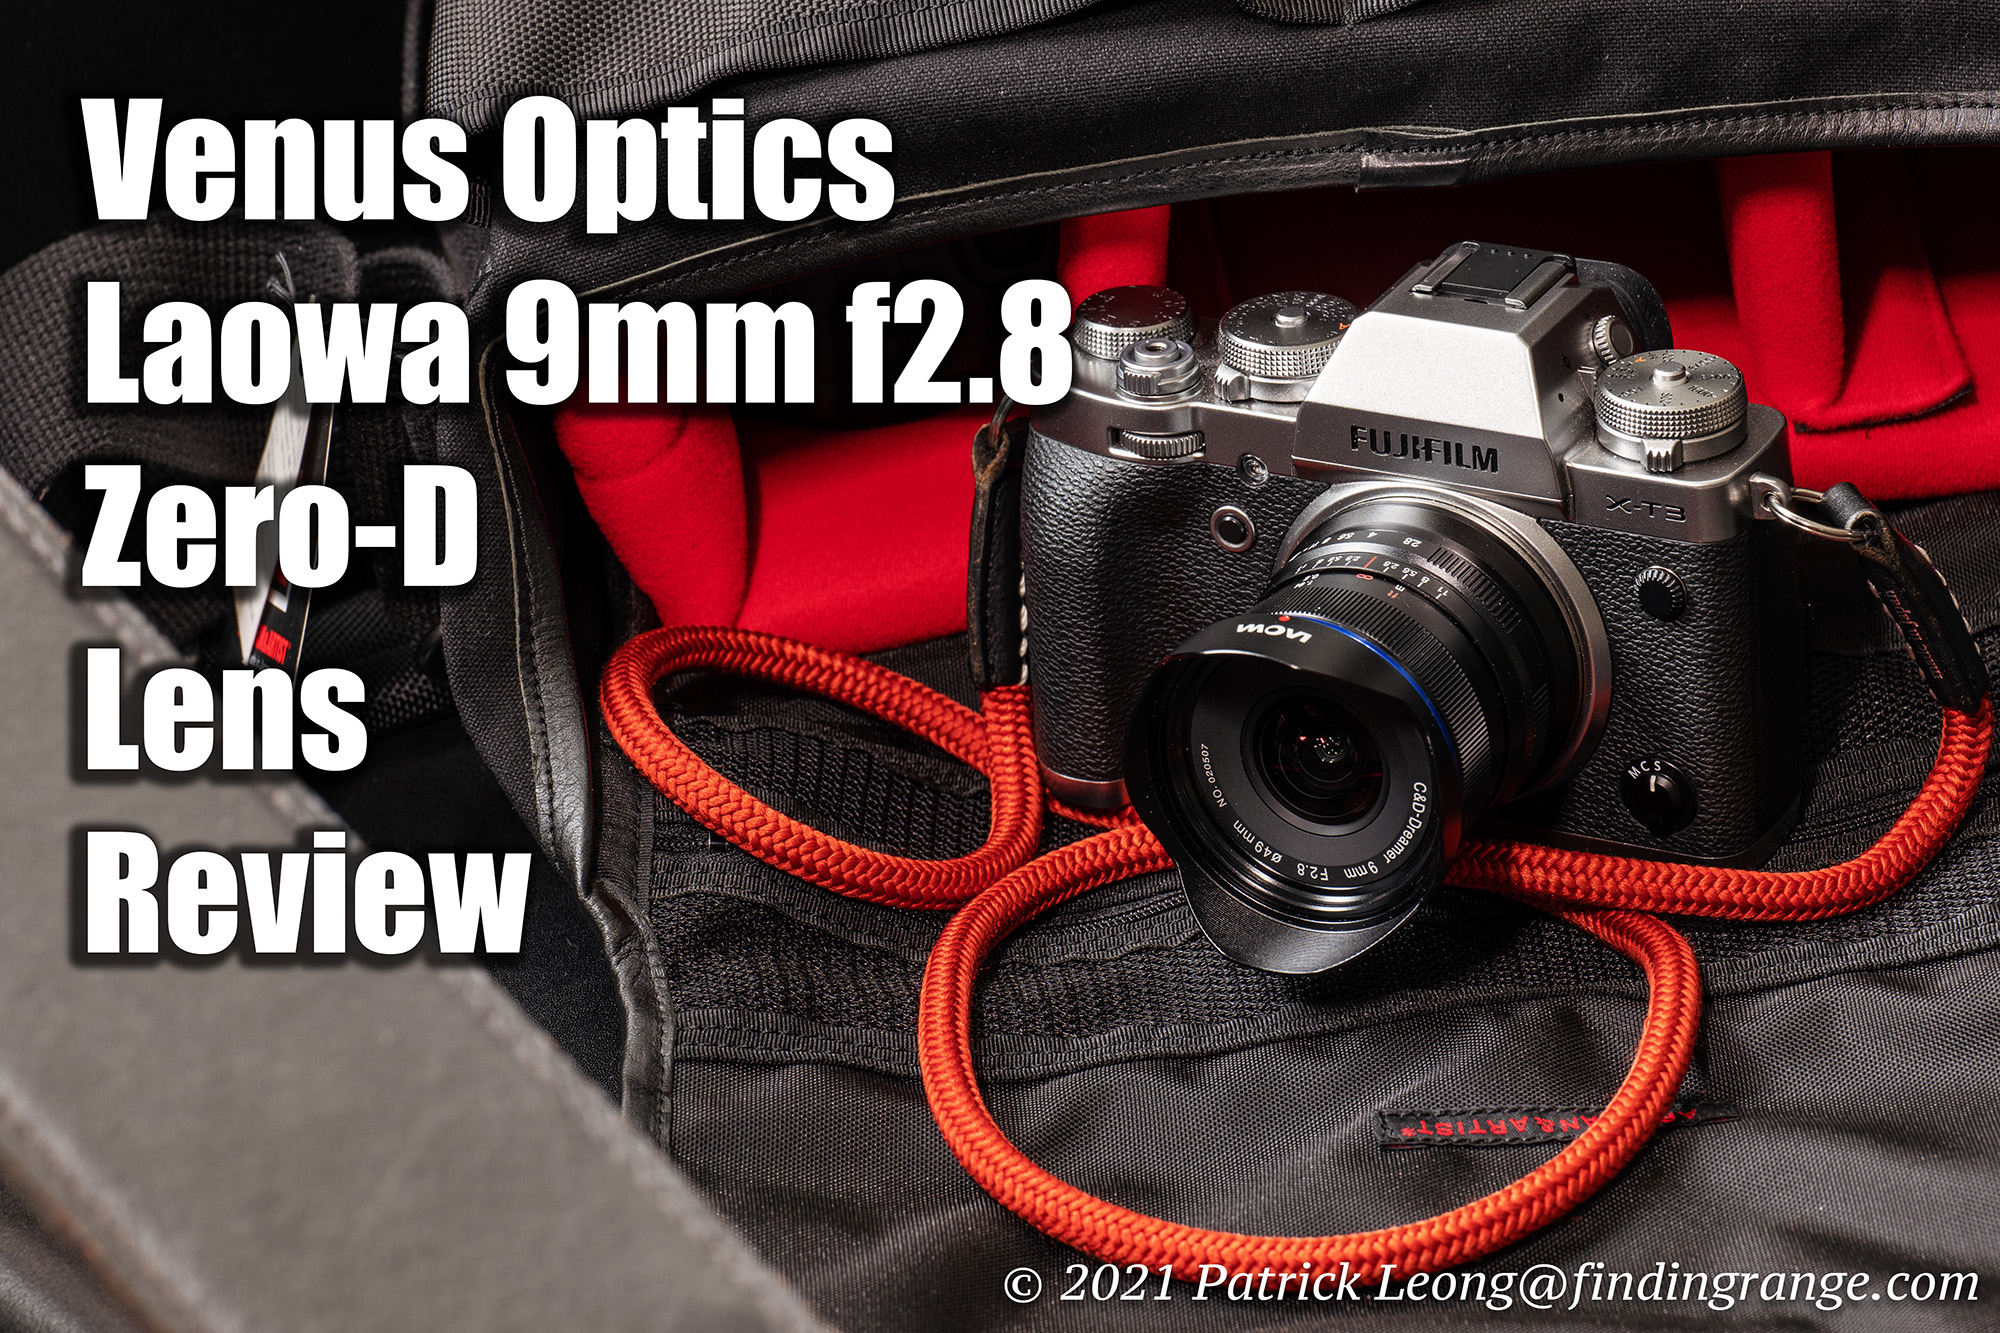 Venus Optics Laowa 9mm f2.8 Zero-D Lens Review - Finding Range